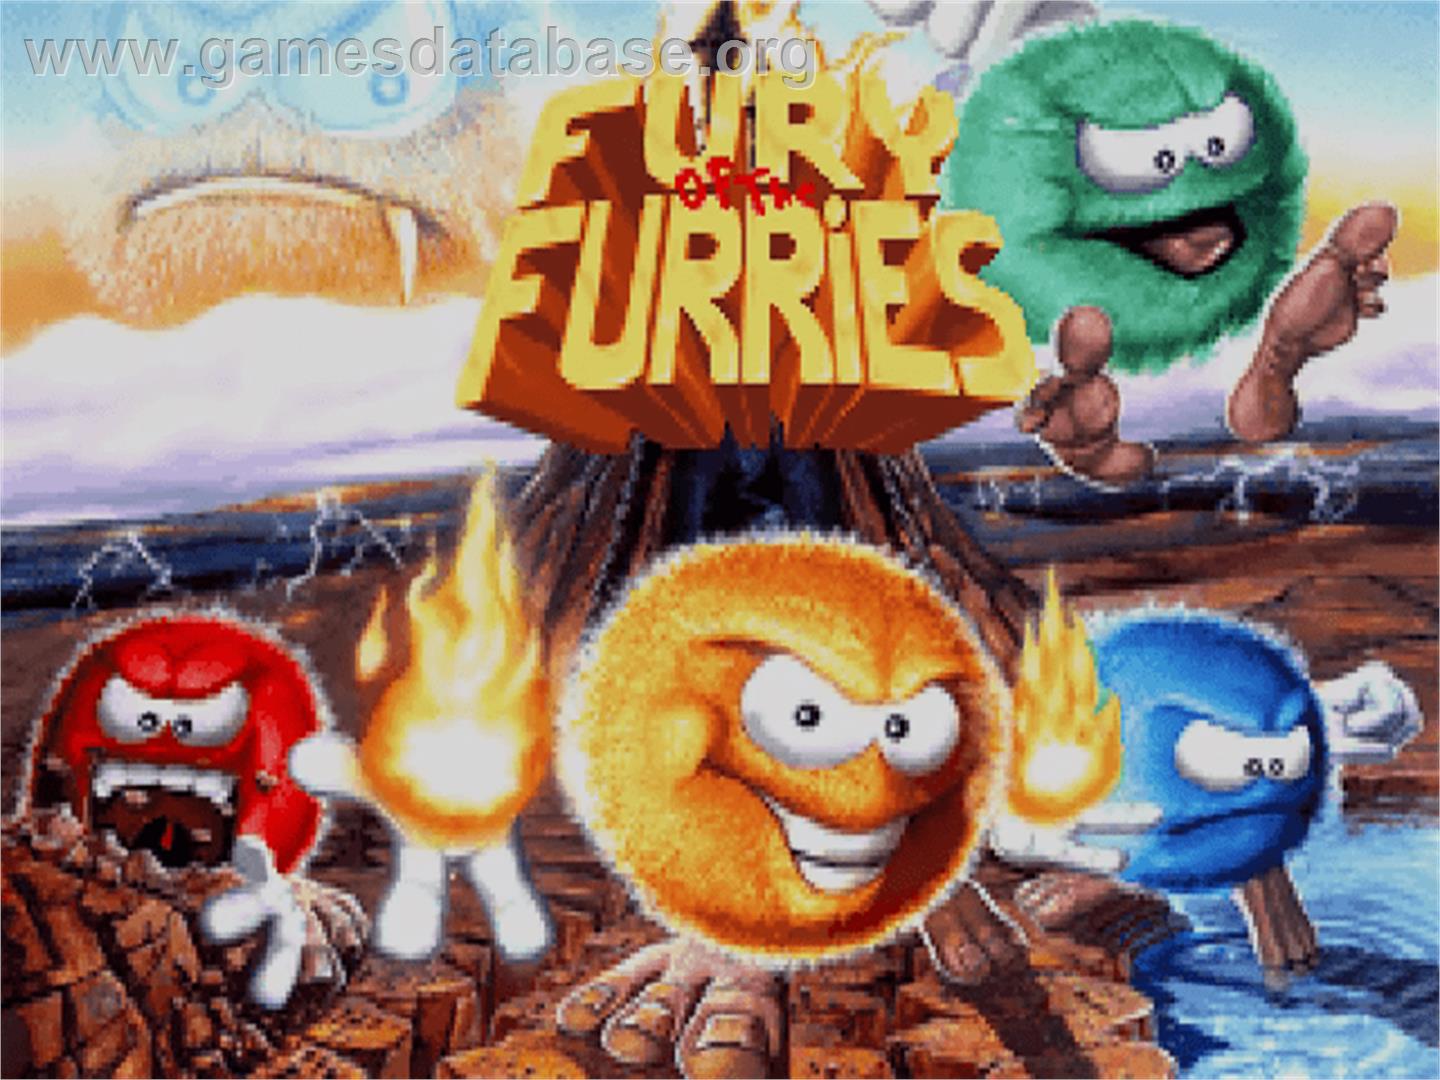 Fury of the Furries - Commodore Amiga CD32 - Artwork - Title Screen